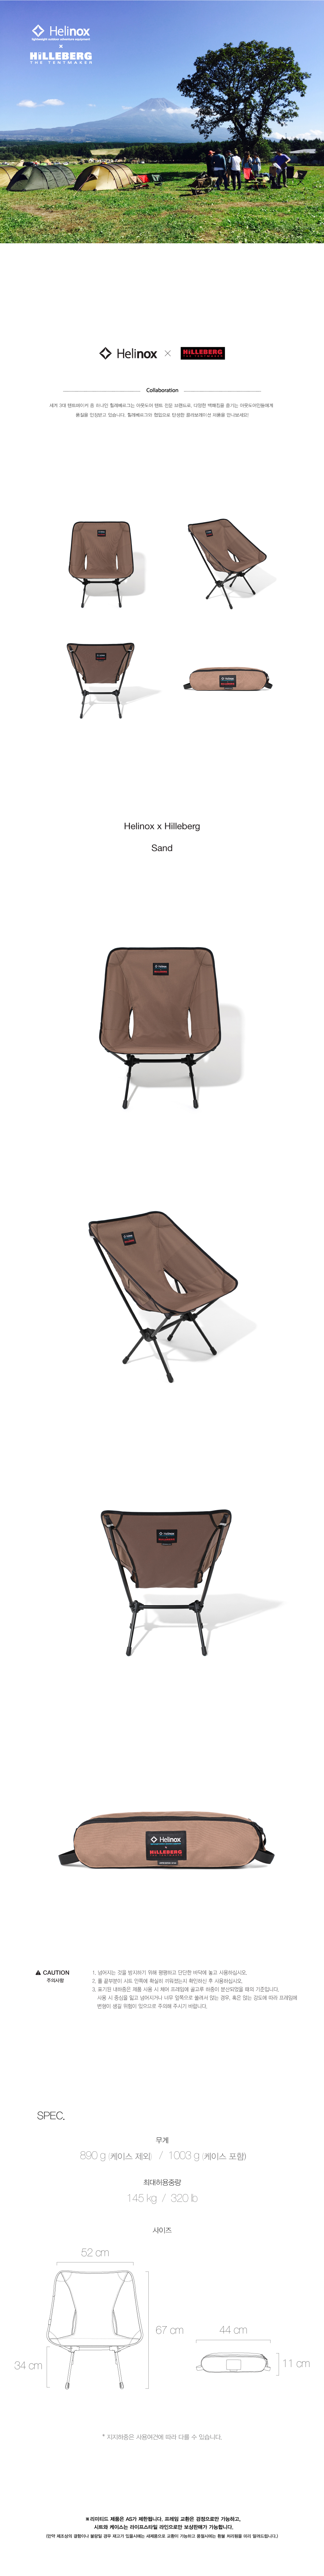 20161031-Hilleberg-chair---sand.jpg